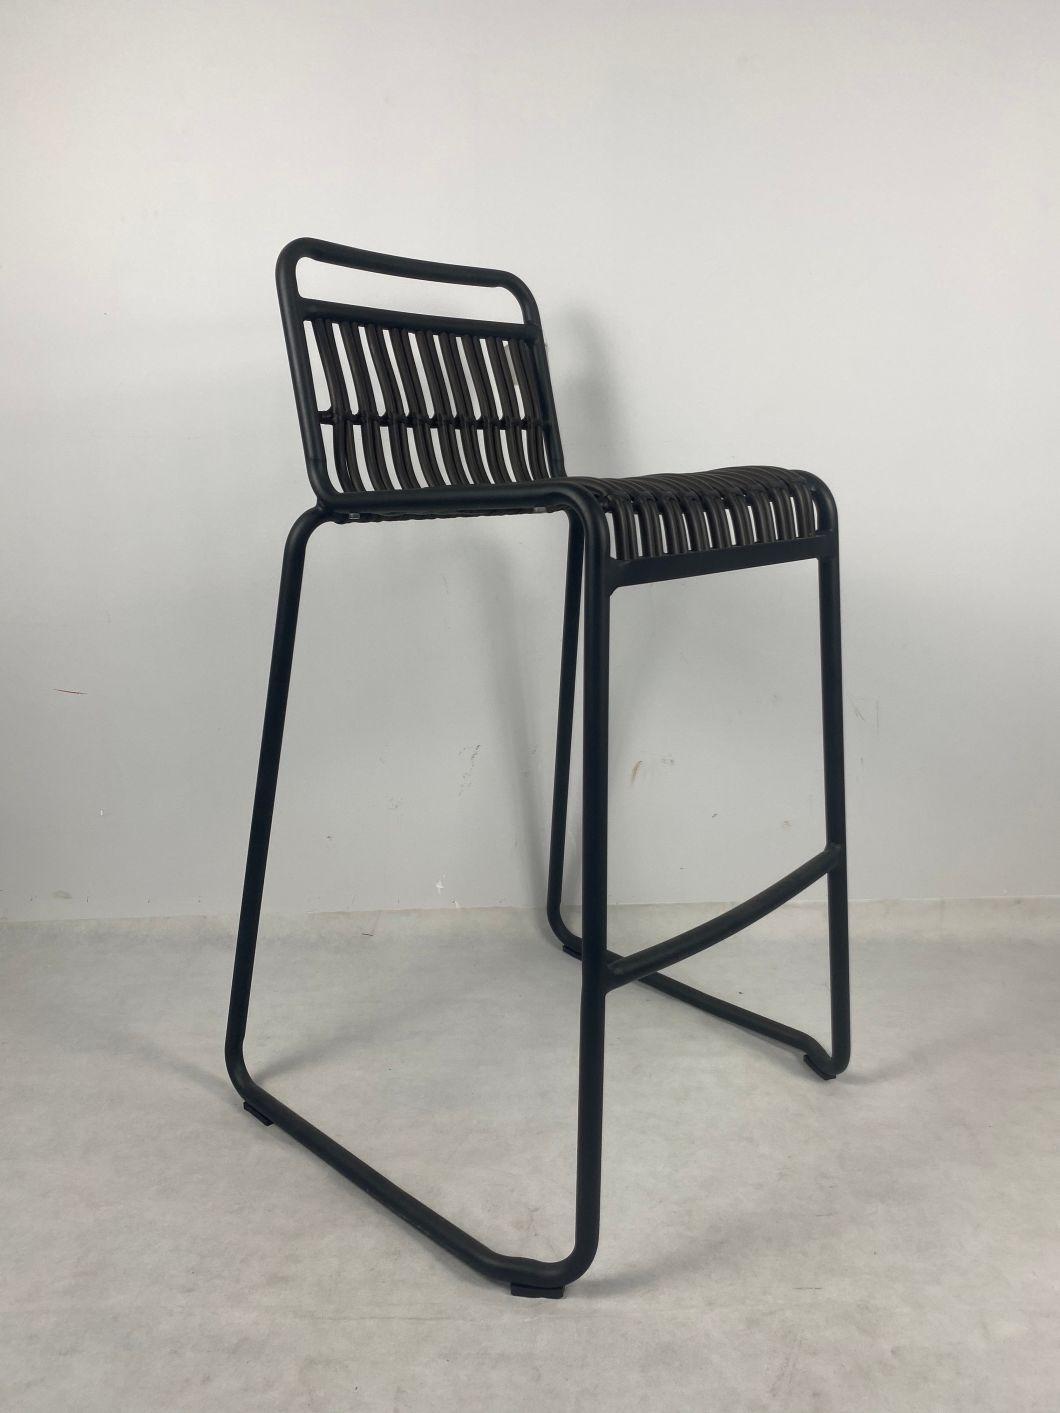 Simplish Look Aluminum Wicker Weaving Bistro Chair Furniture